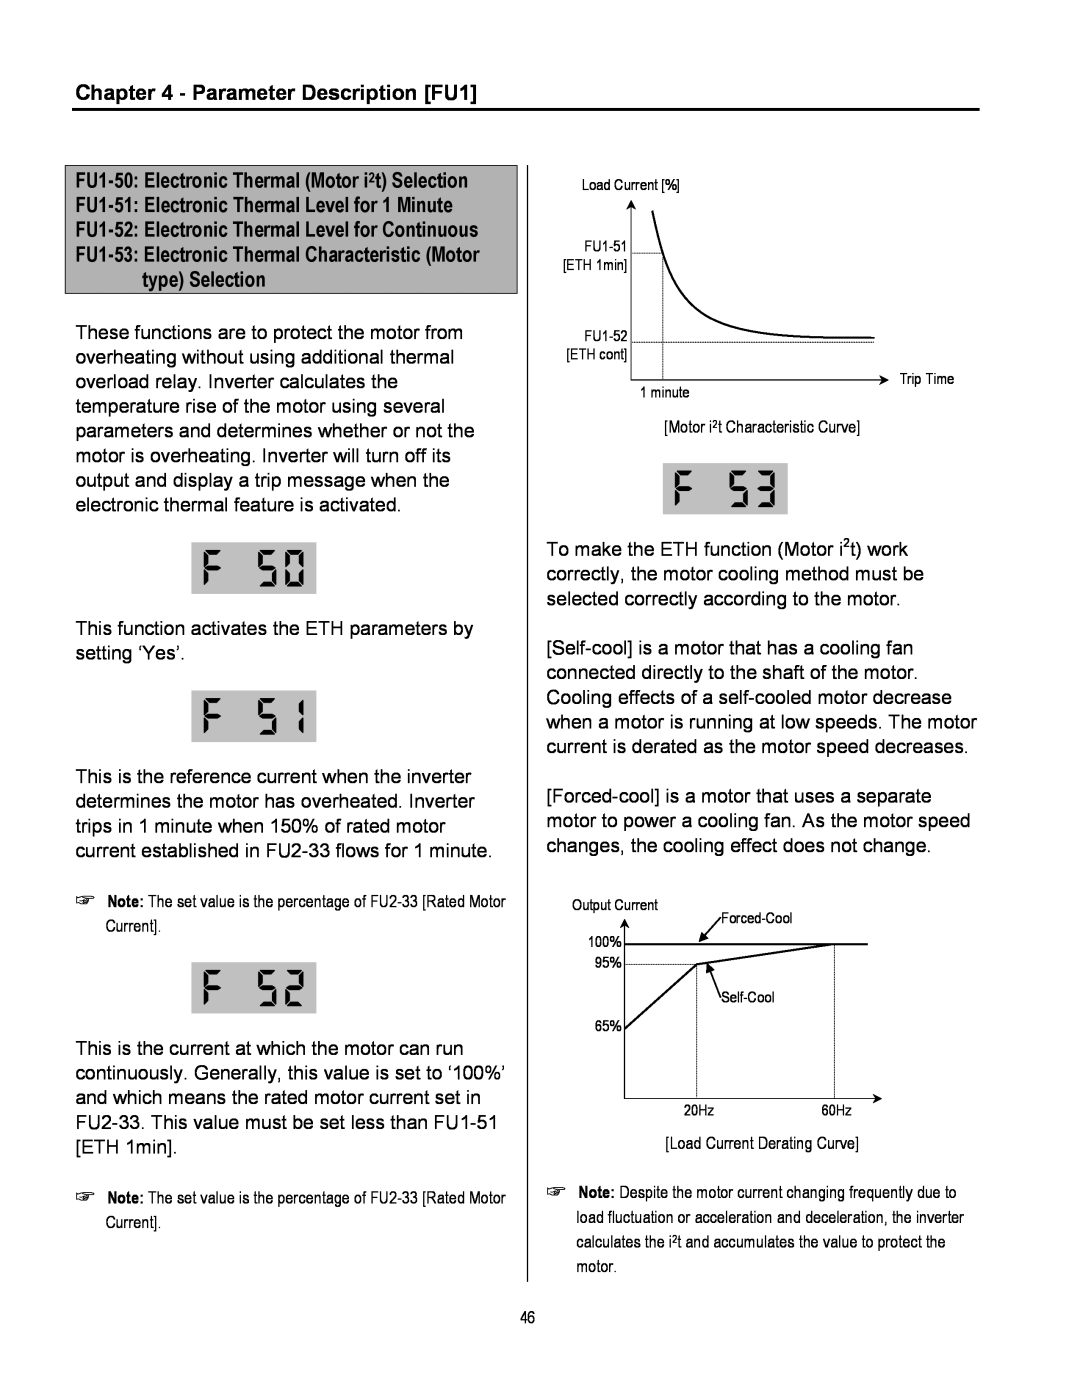 Cleveland Range inverter manual Parameter Description FU1, FU1-50 Electronic Thermal Motor i2t Selection 